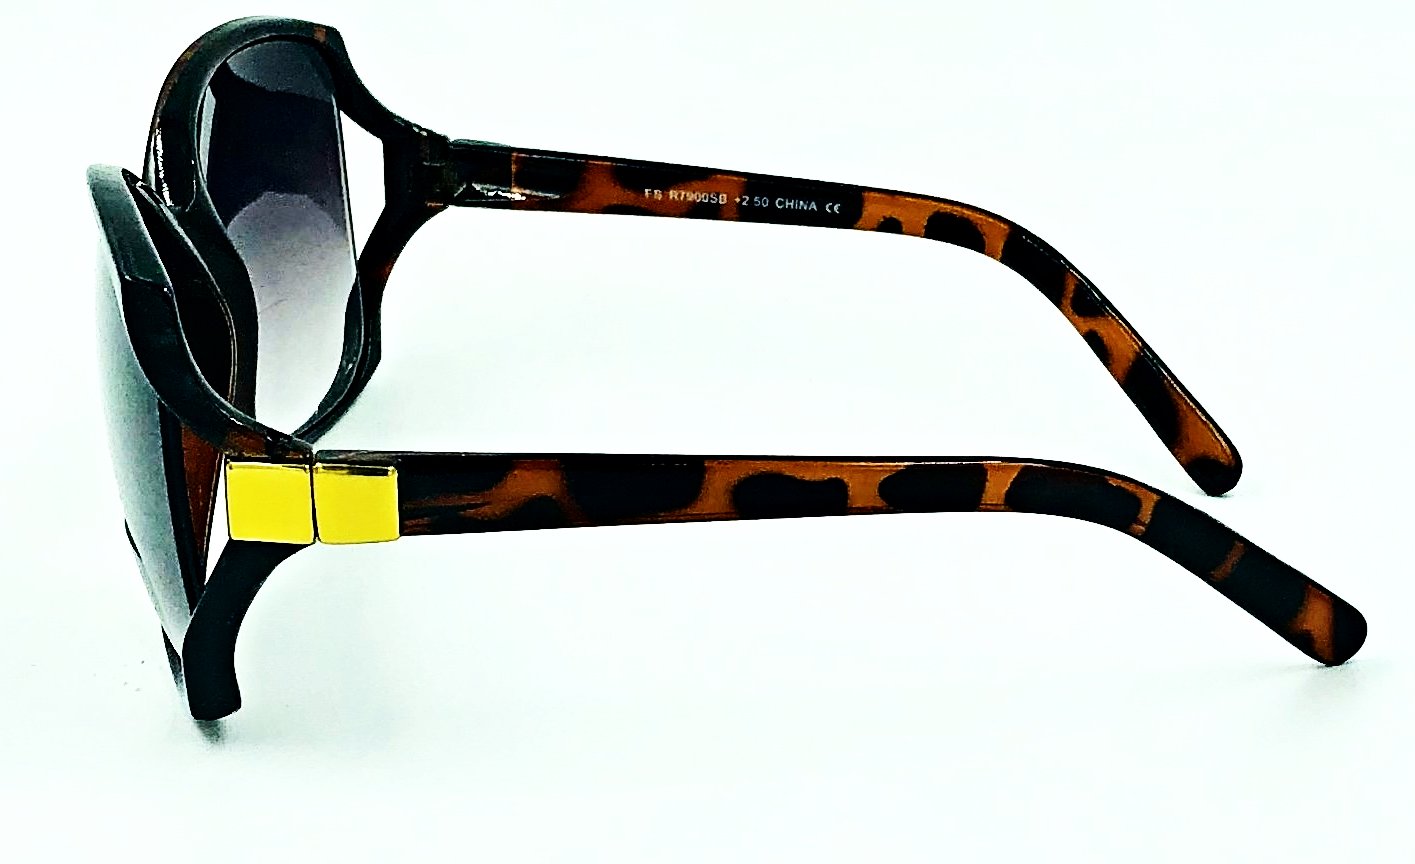 Jackie O Bifocal Reading Sunglasses, $10.95